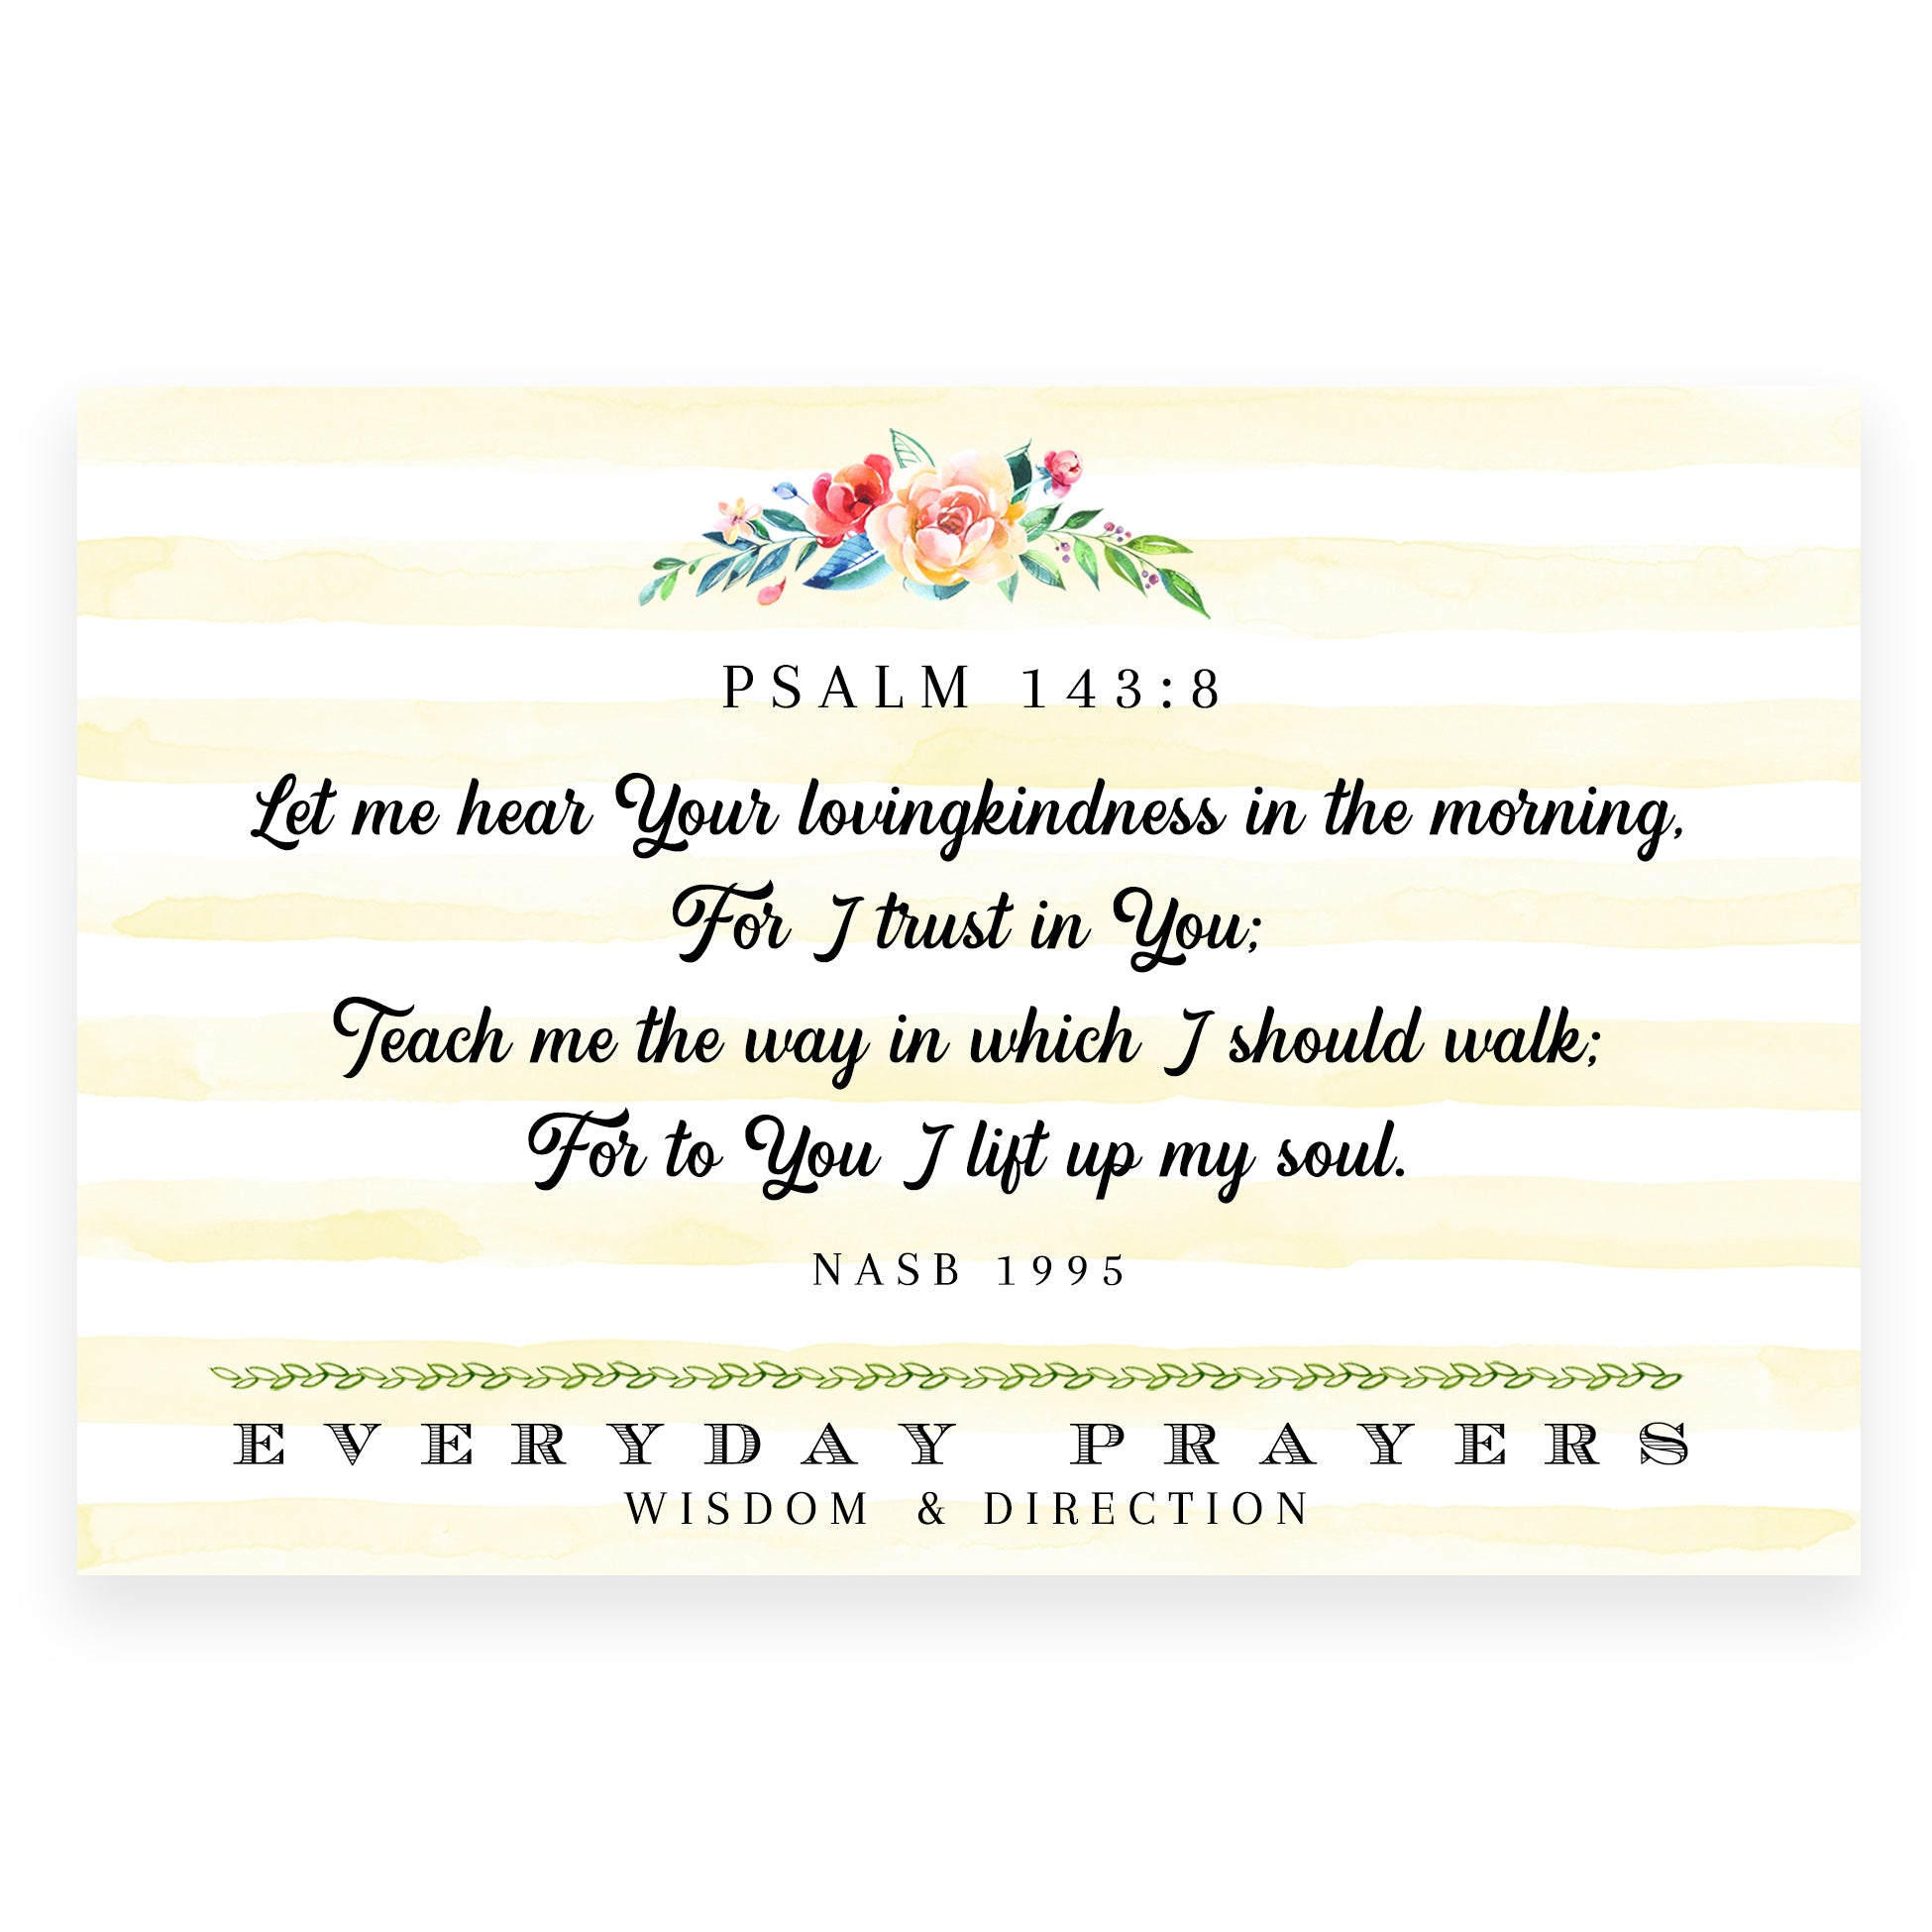 Let Me Hear Your Lovingkindness (Psalm 143:8) - Everyday Prayer Card